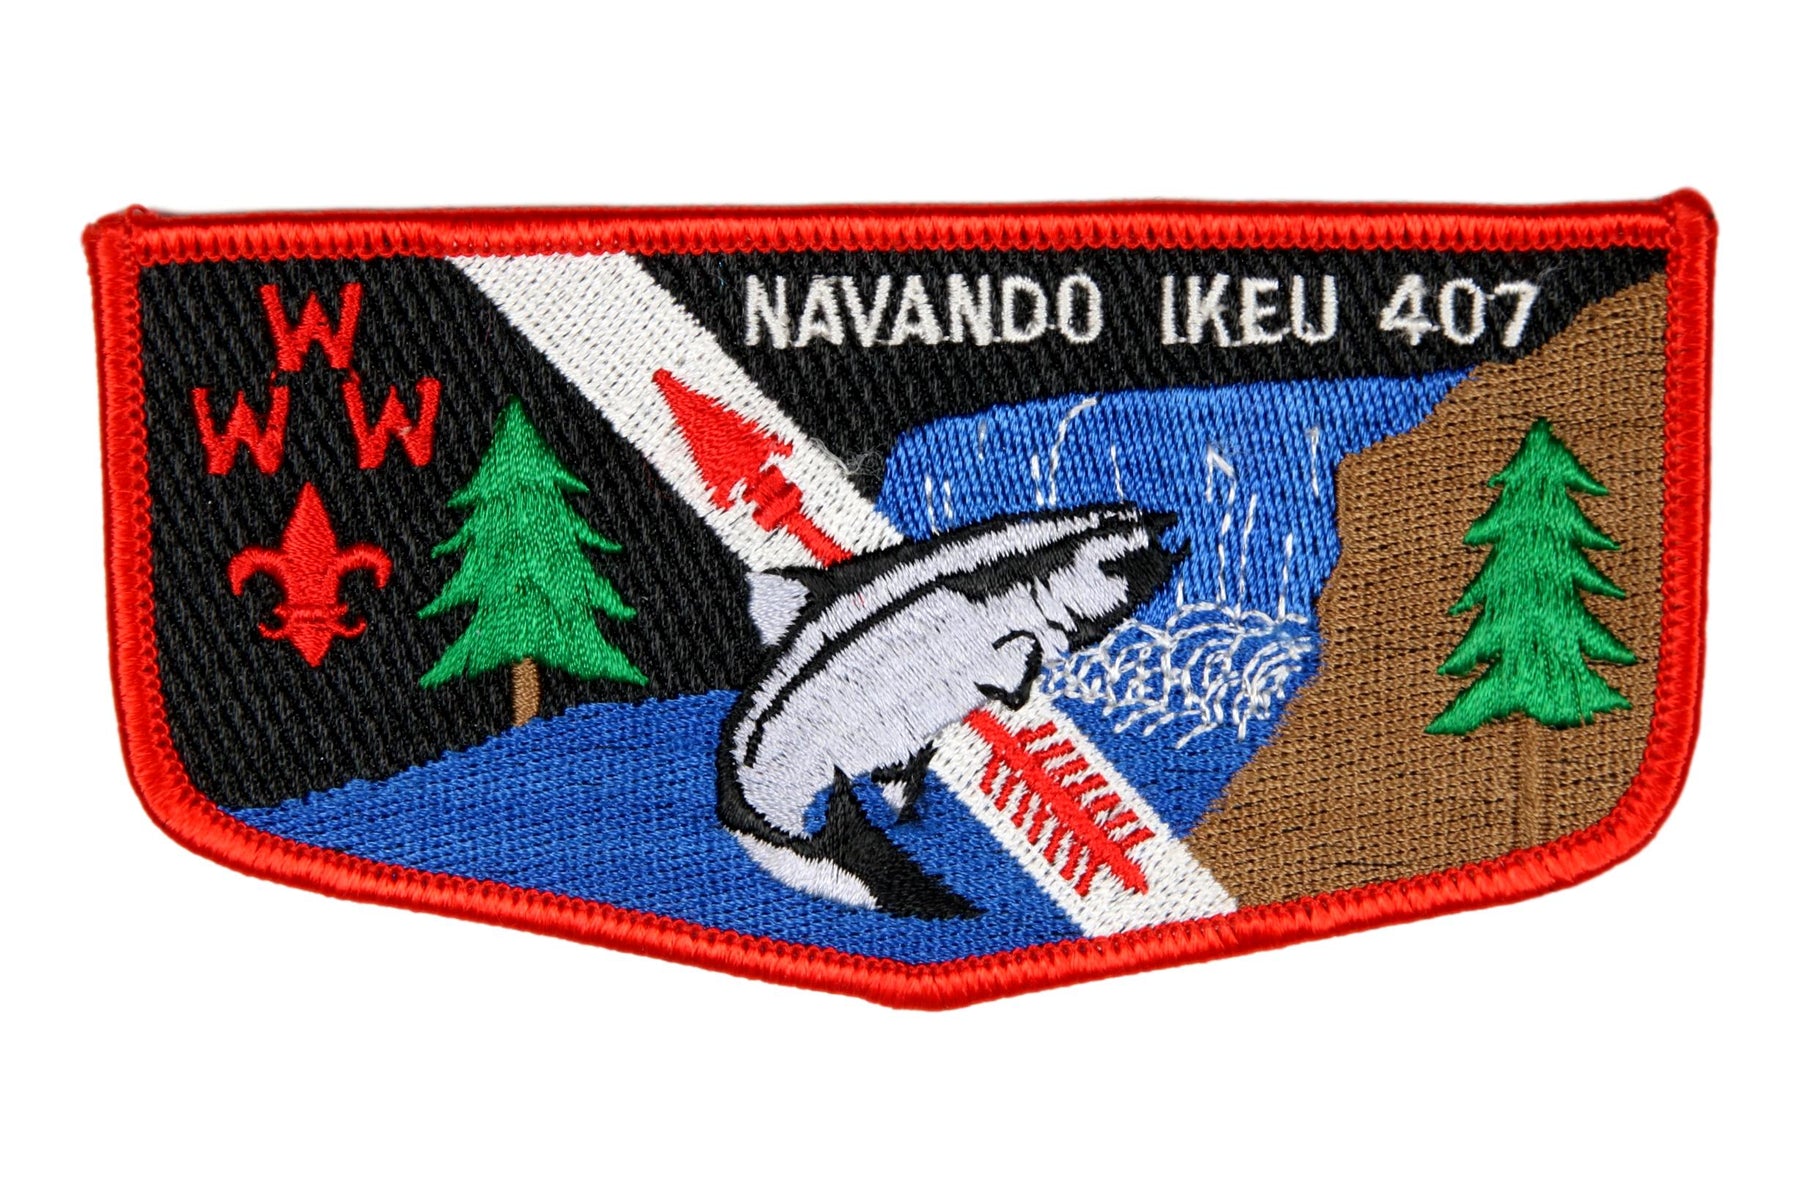 Lodge 407 Navando Ikeu Flap S-23